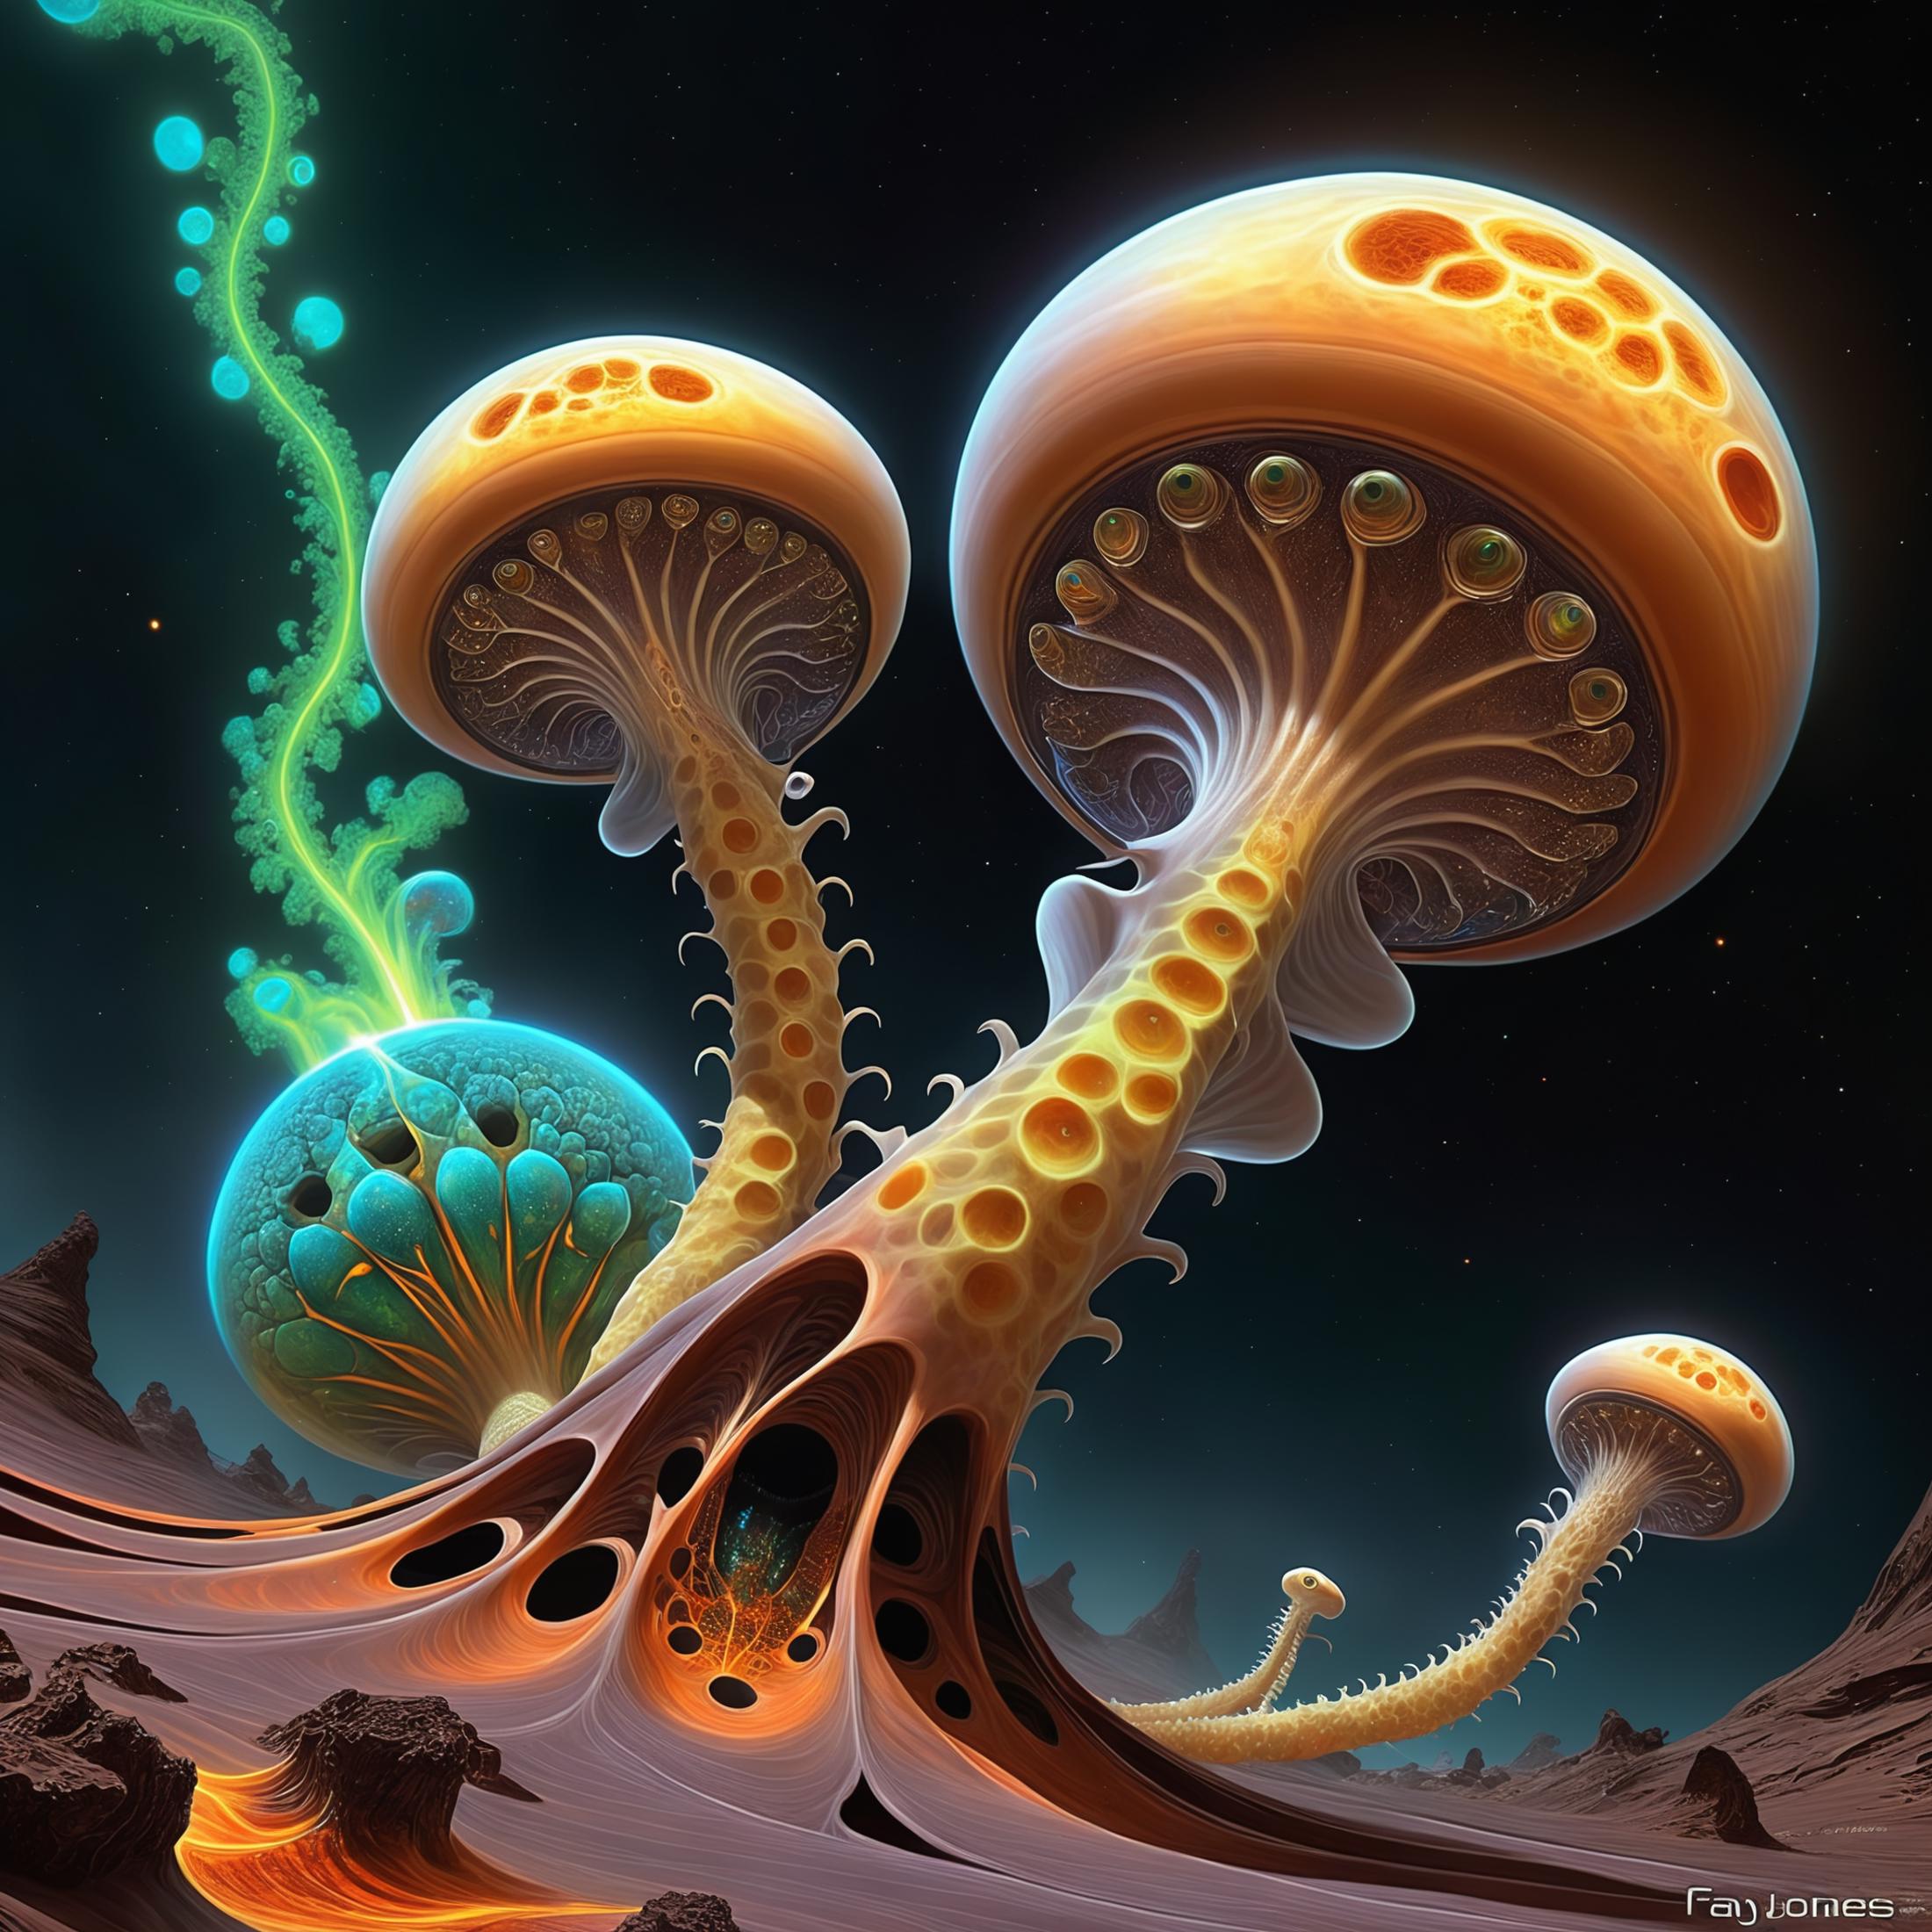 The Art of Mushrooms: A Digital Illustration of a Beautiful Mushroom Scene